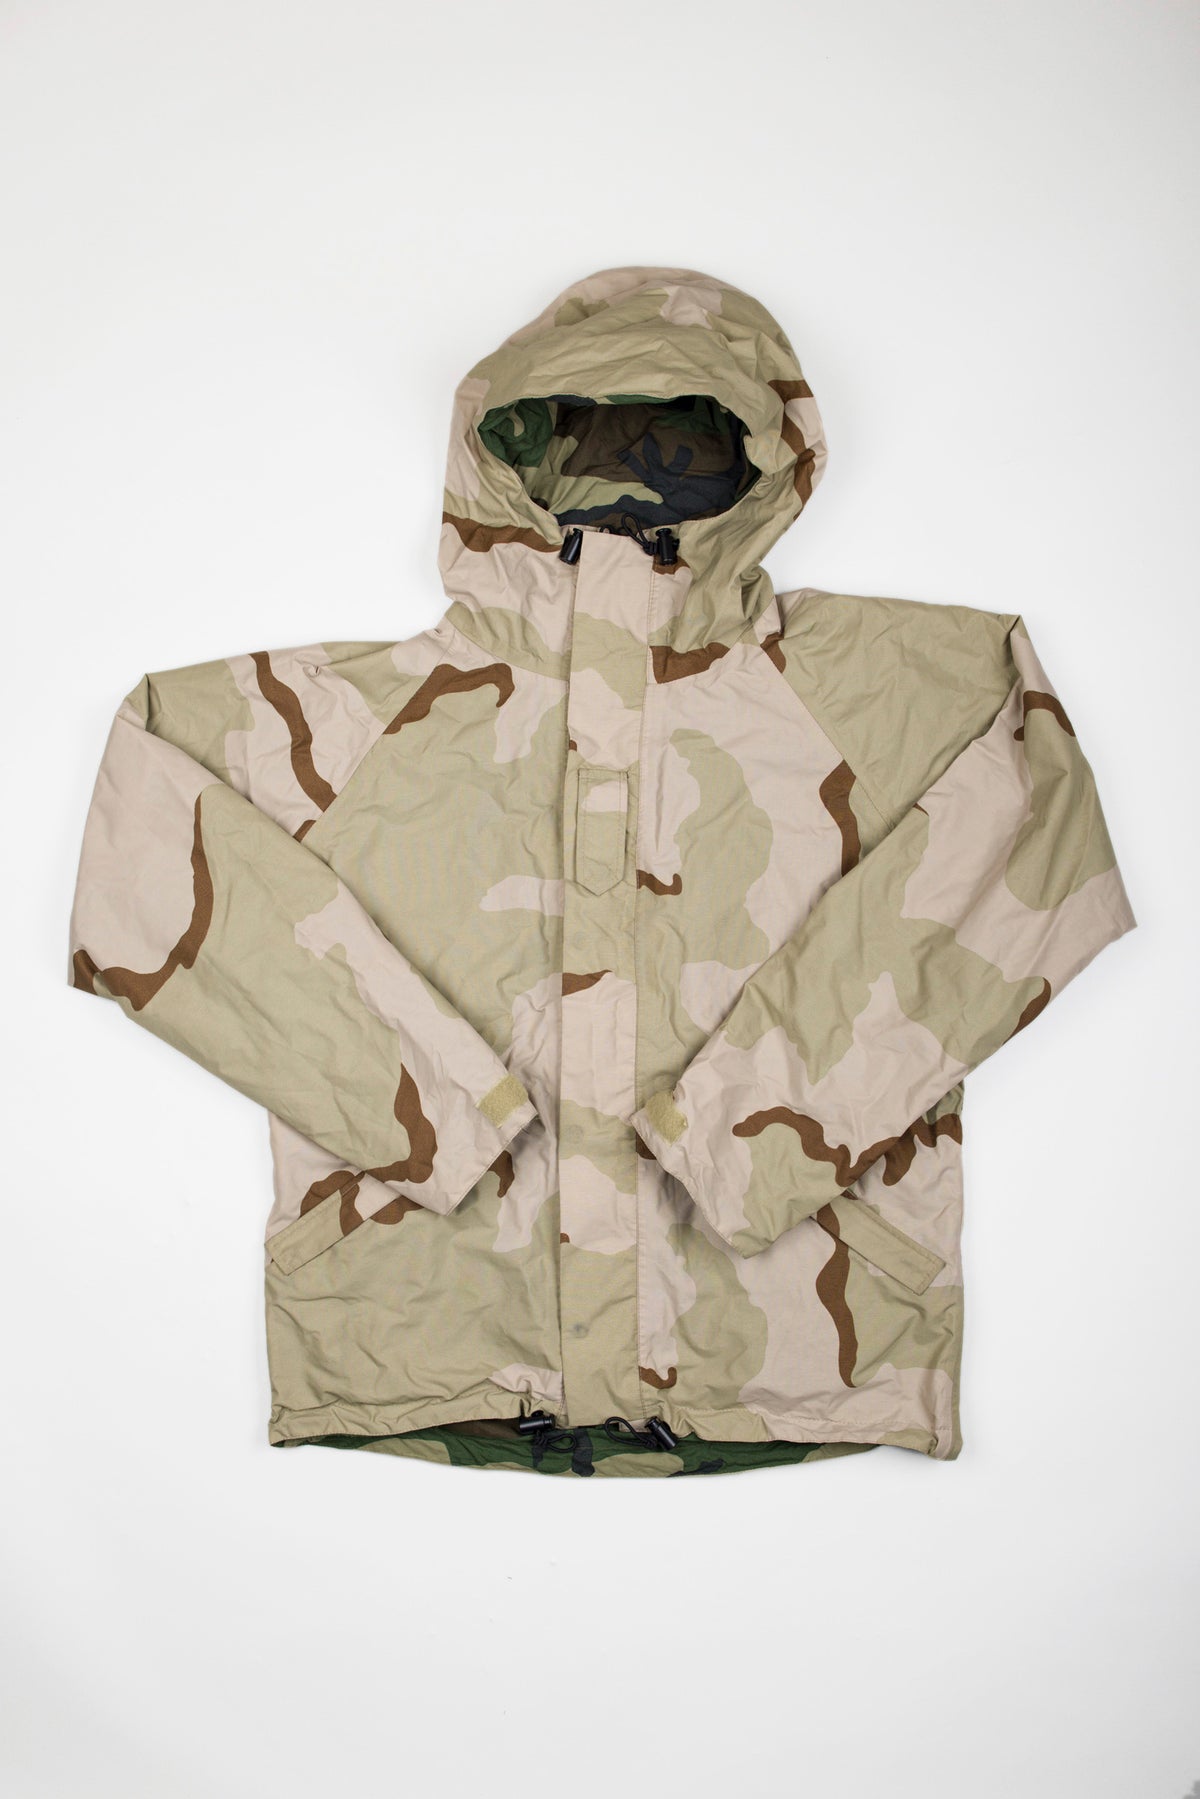 Camouflage Jackets